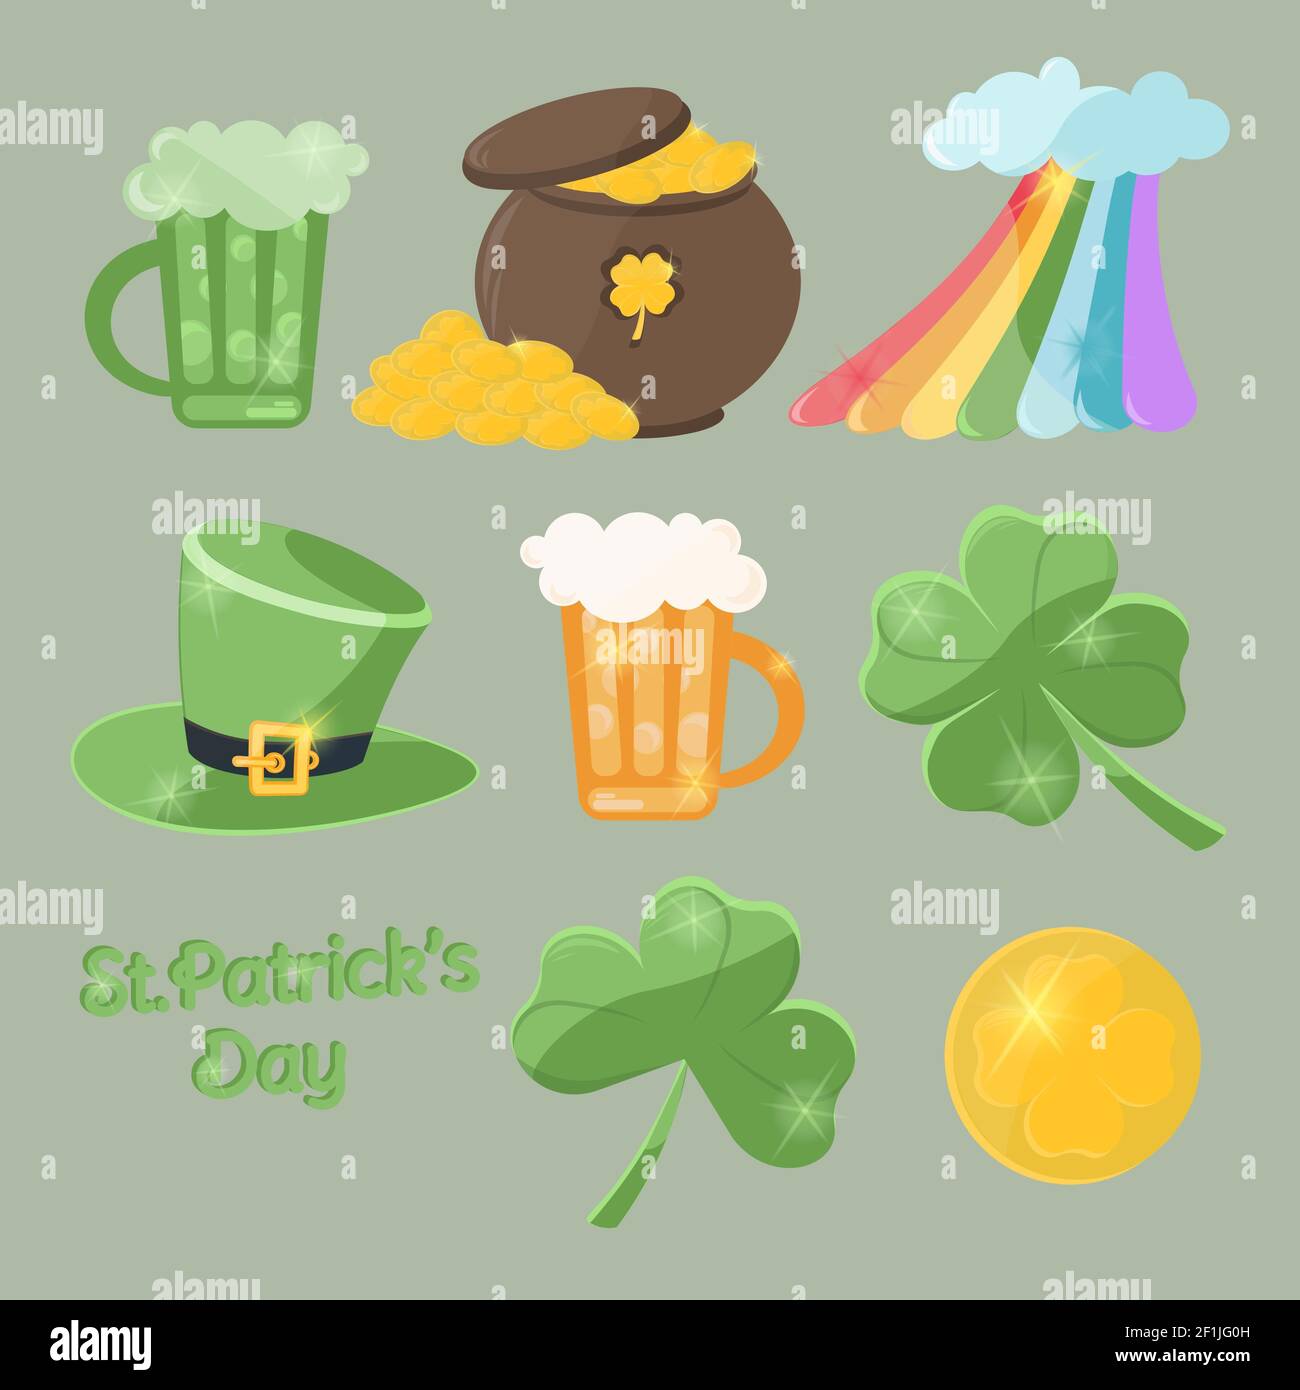 Saint Patrick's Day character set Leprechaun hat, pot of gold coins, rainbow, shamrock, pint of beer, pint of ale, gold coin, clover Sт.Patrick's Day Stock Photo